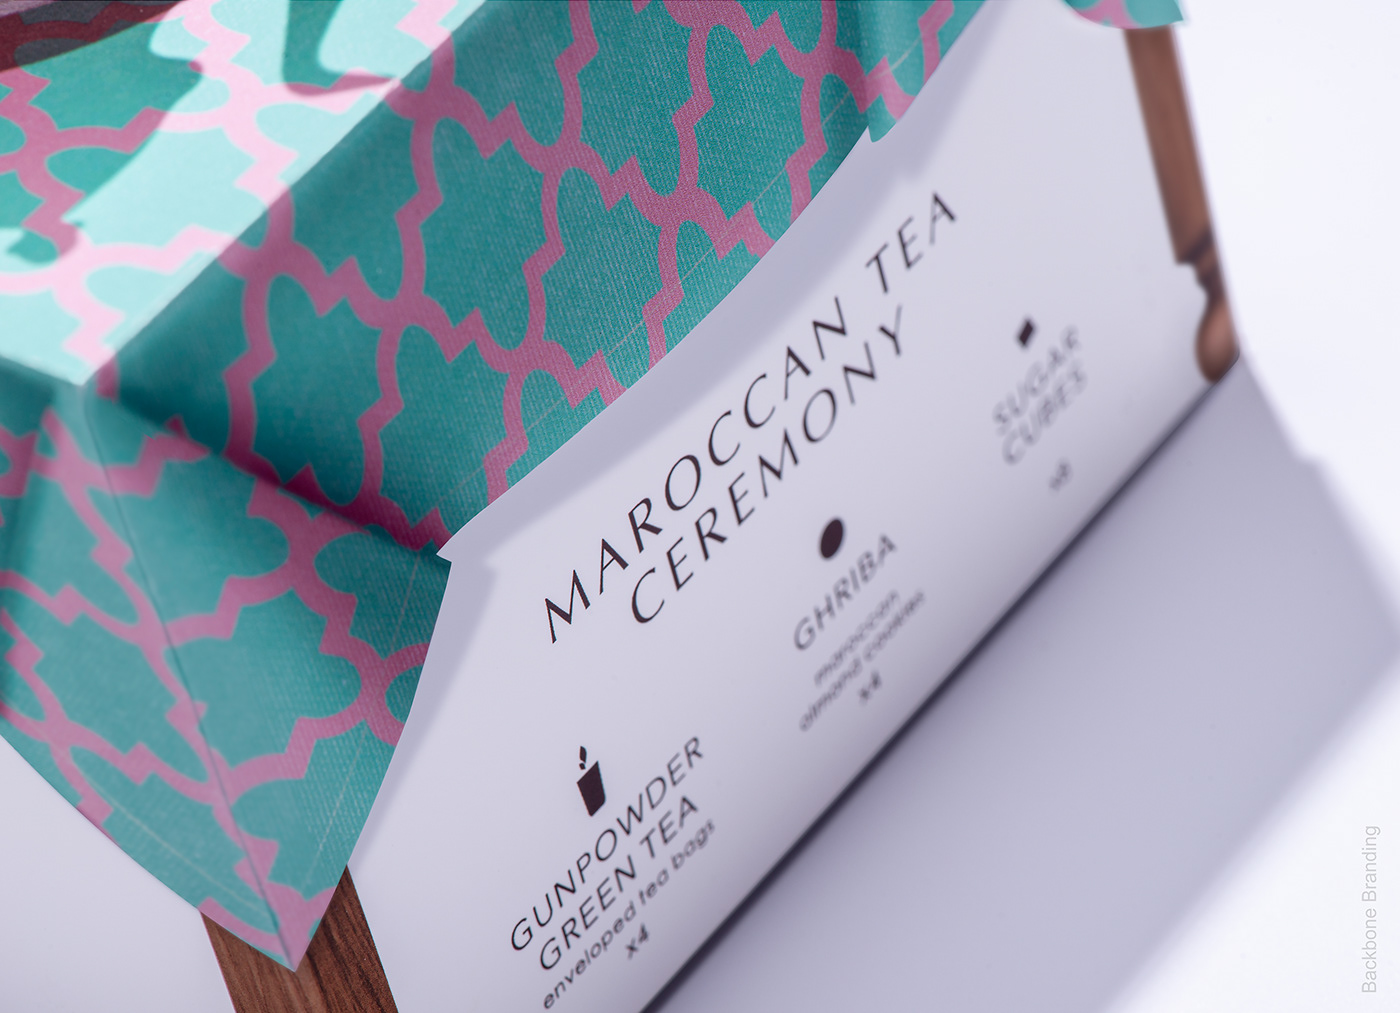 branding  culture design Packaging sweet tea